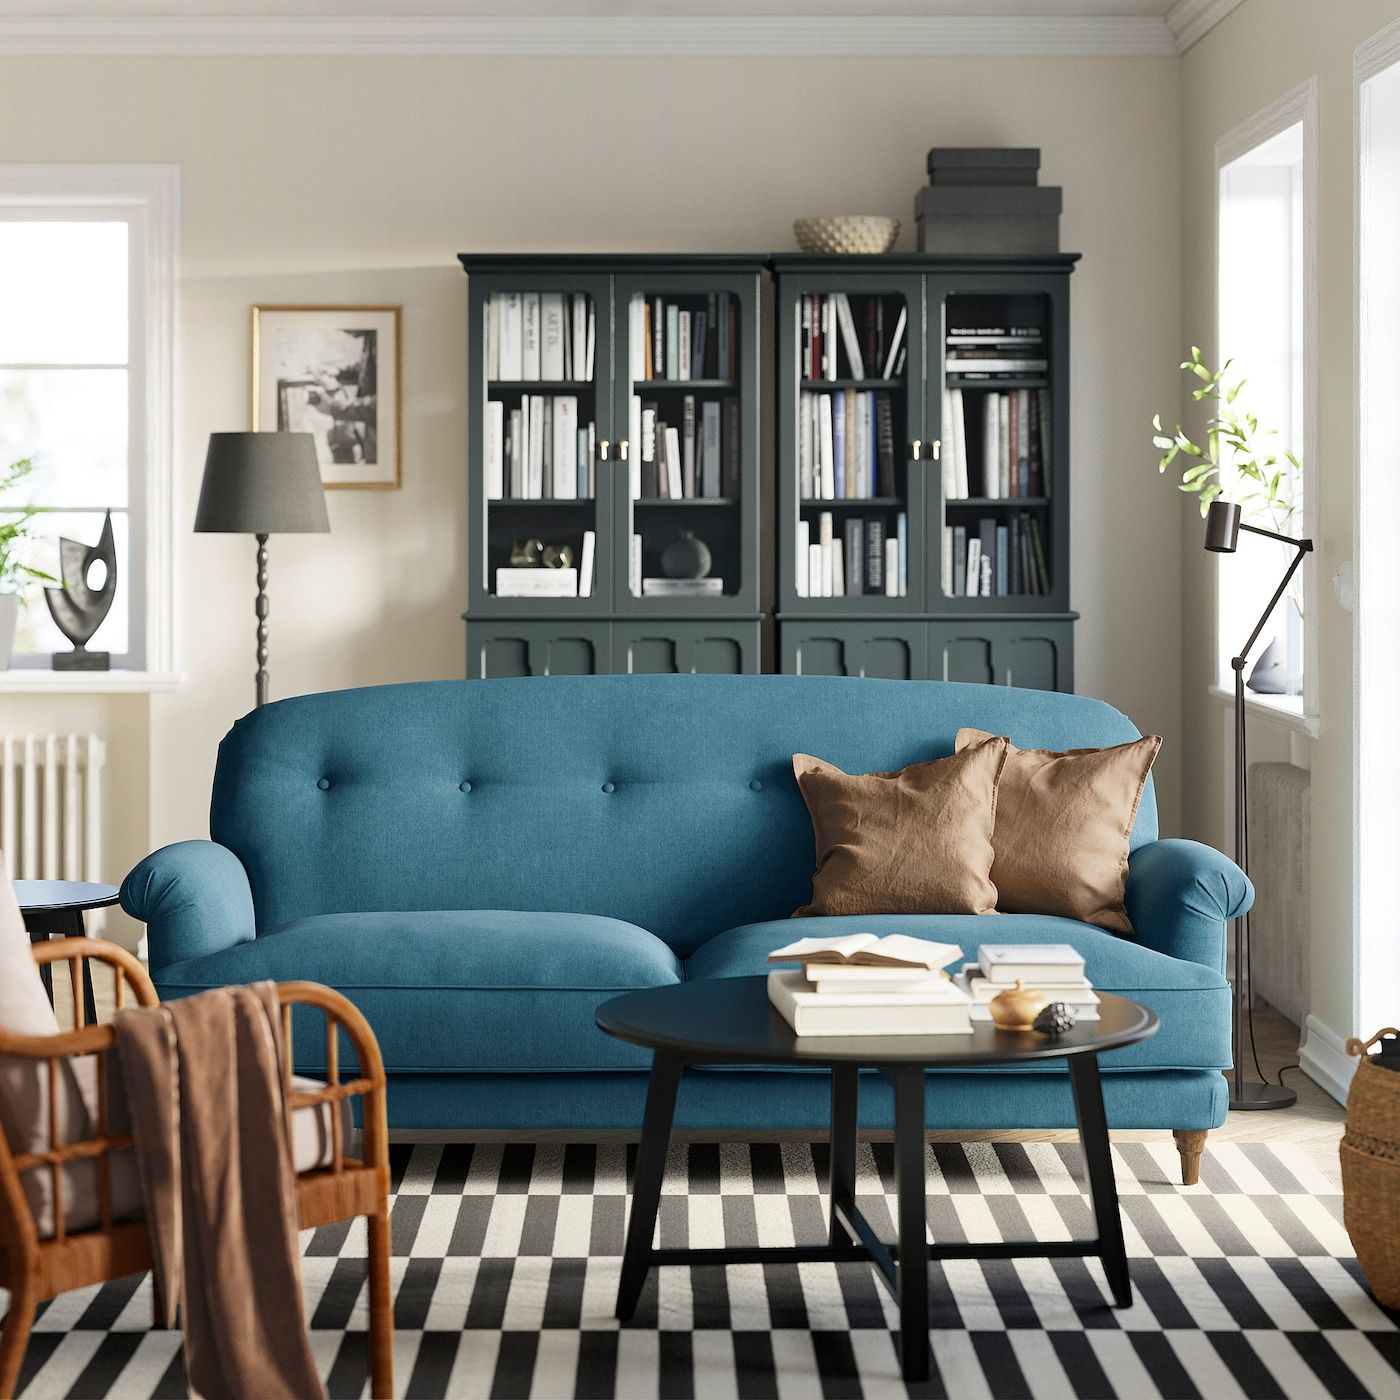 Esseboda 3 Seat Sofa, Tallmyra Blue – Ikea For Sofas In Blue (View 7 of 15)